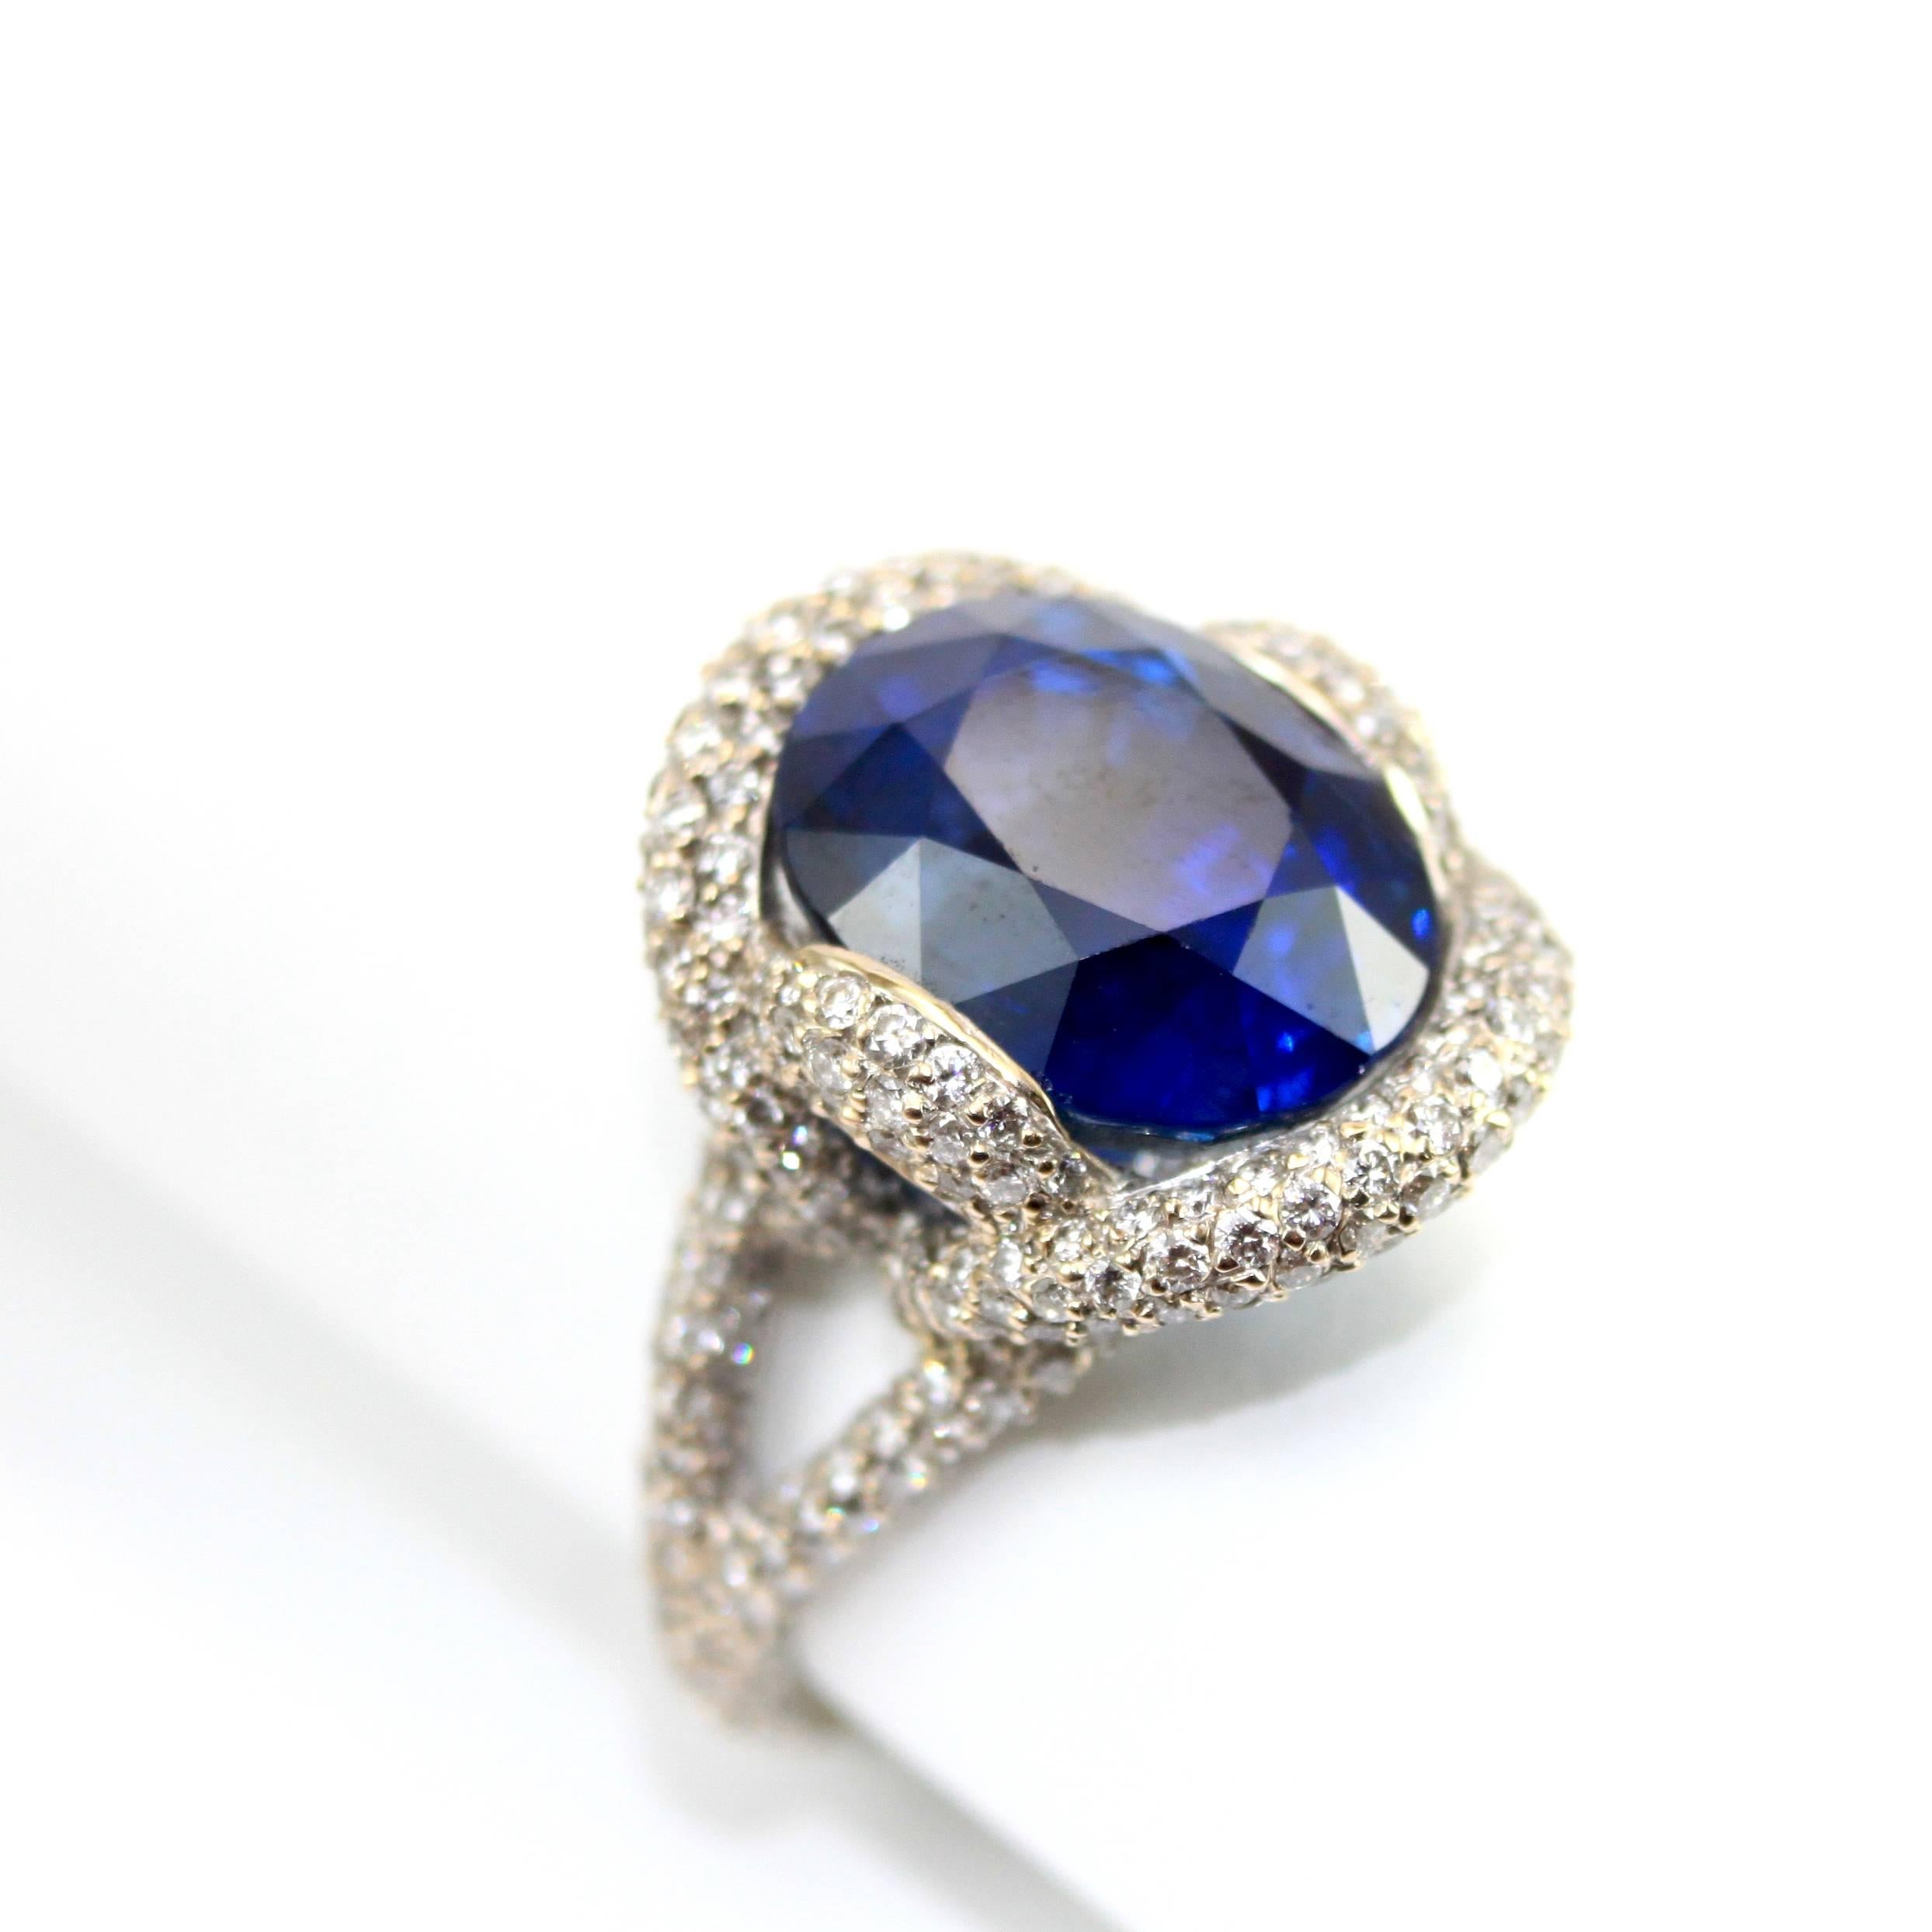 12 carat sapphire ring